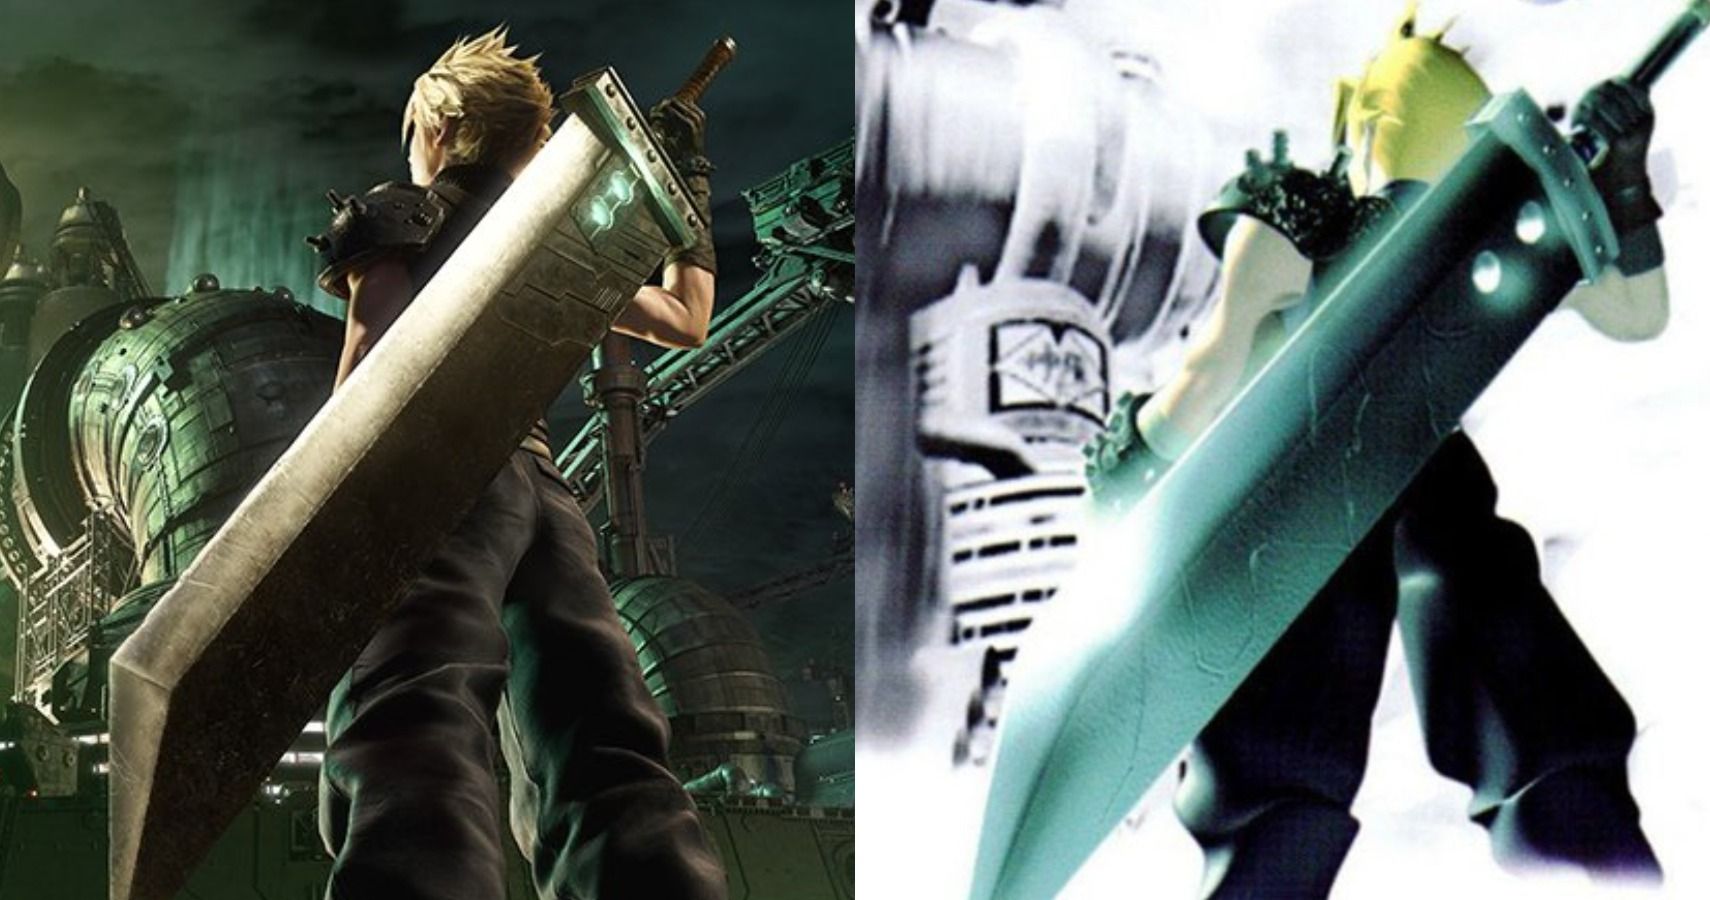 Final-Fantasy-VII-Remake-Cover-Comparison.jpg.